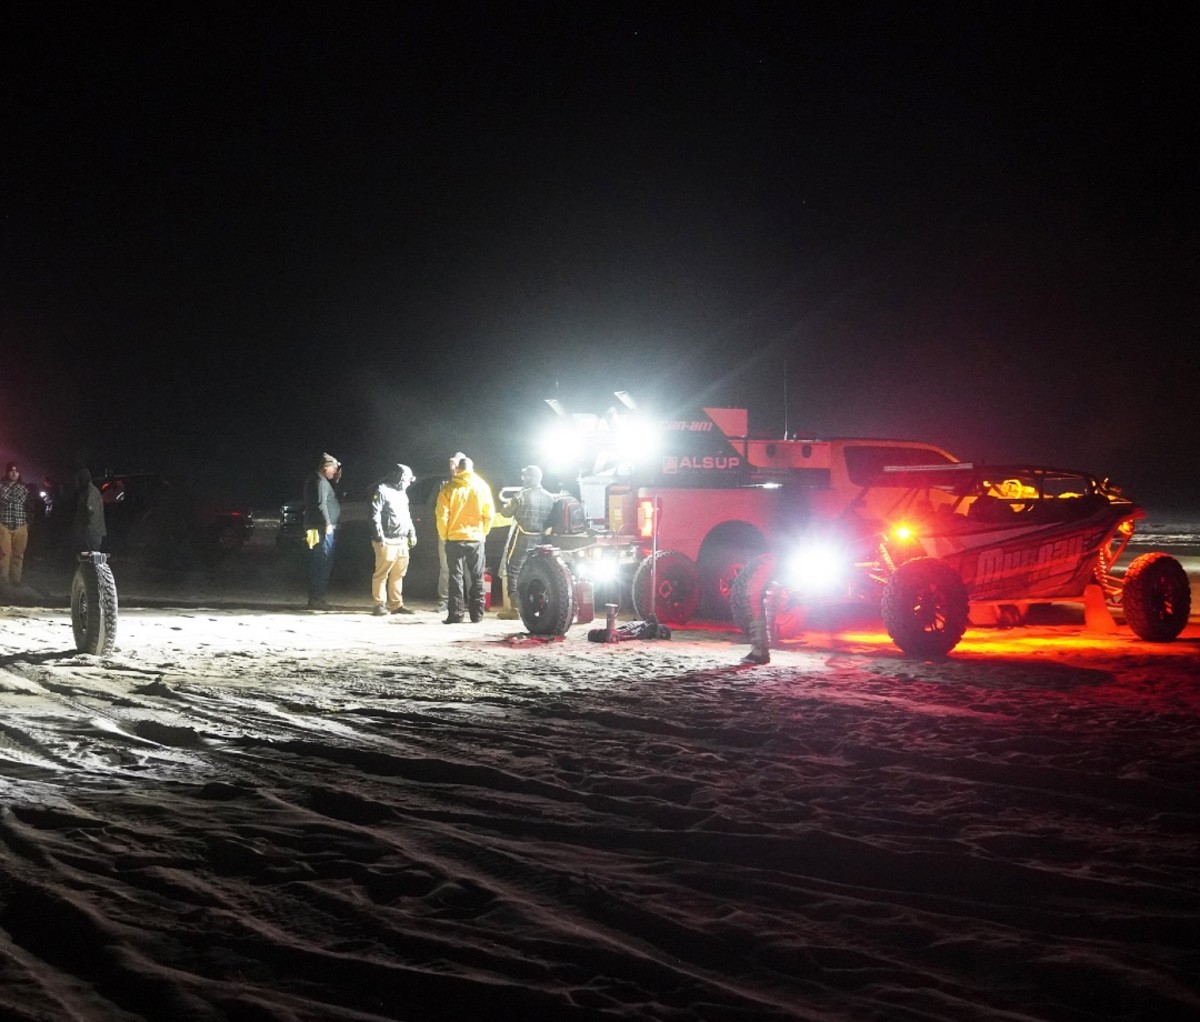 Race car mechanics service a UTV during a pit stop at night in a desert race.